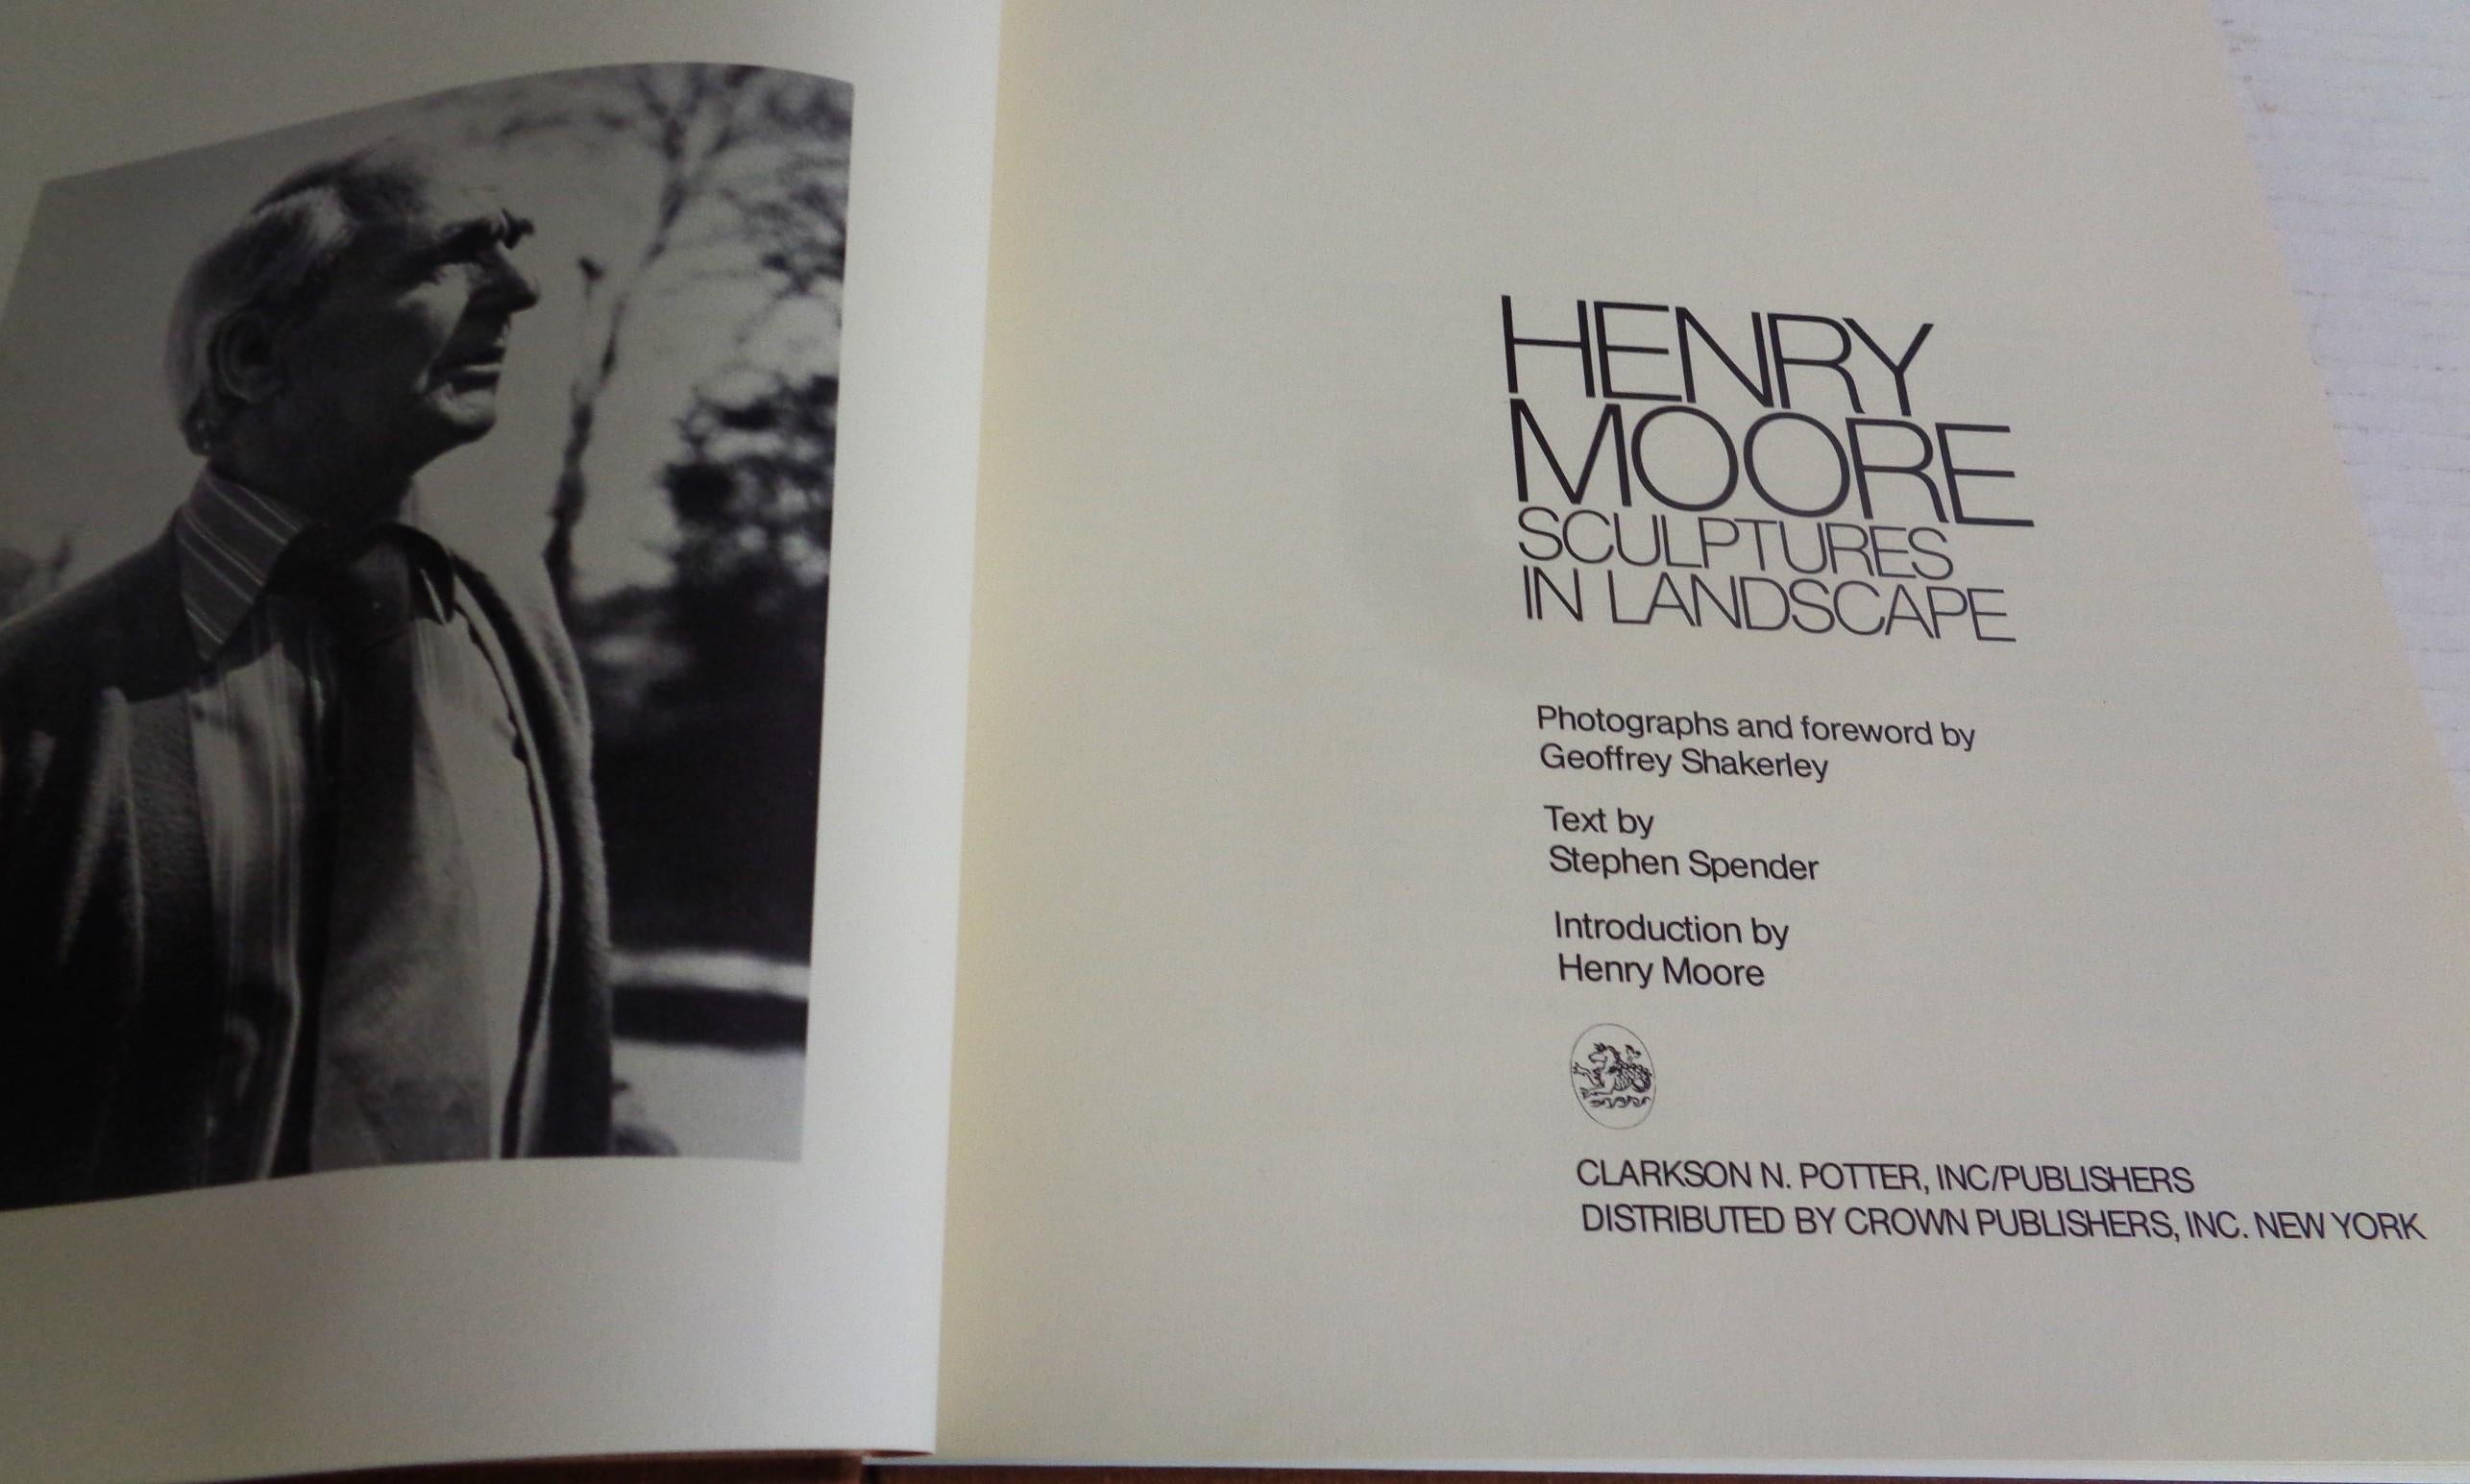 Paper Henry Moore Sculptures in Landscape - 1978 Clarkson N. Potter - 1st Edition For Sale